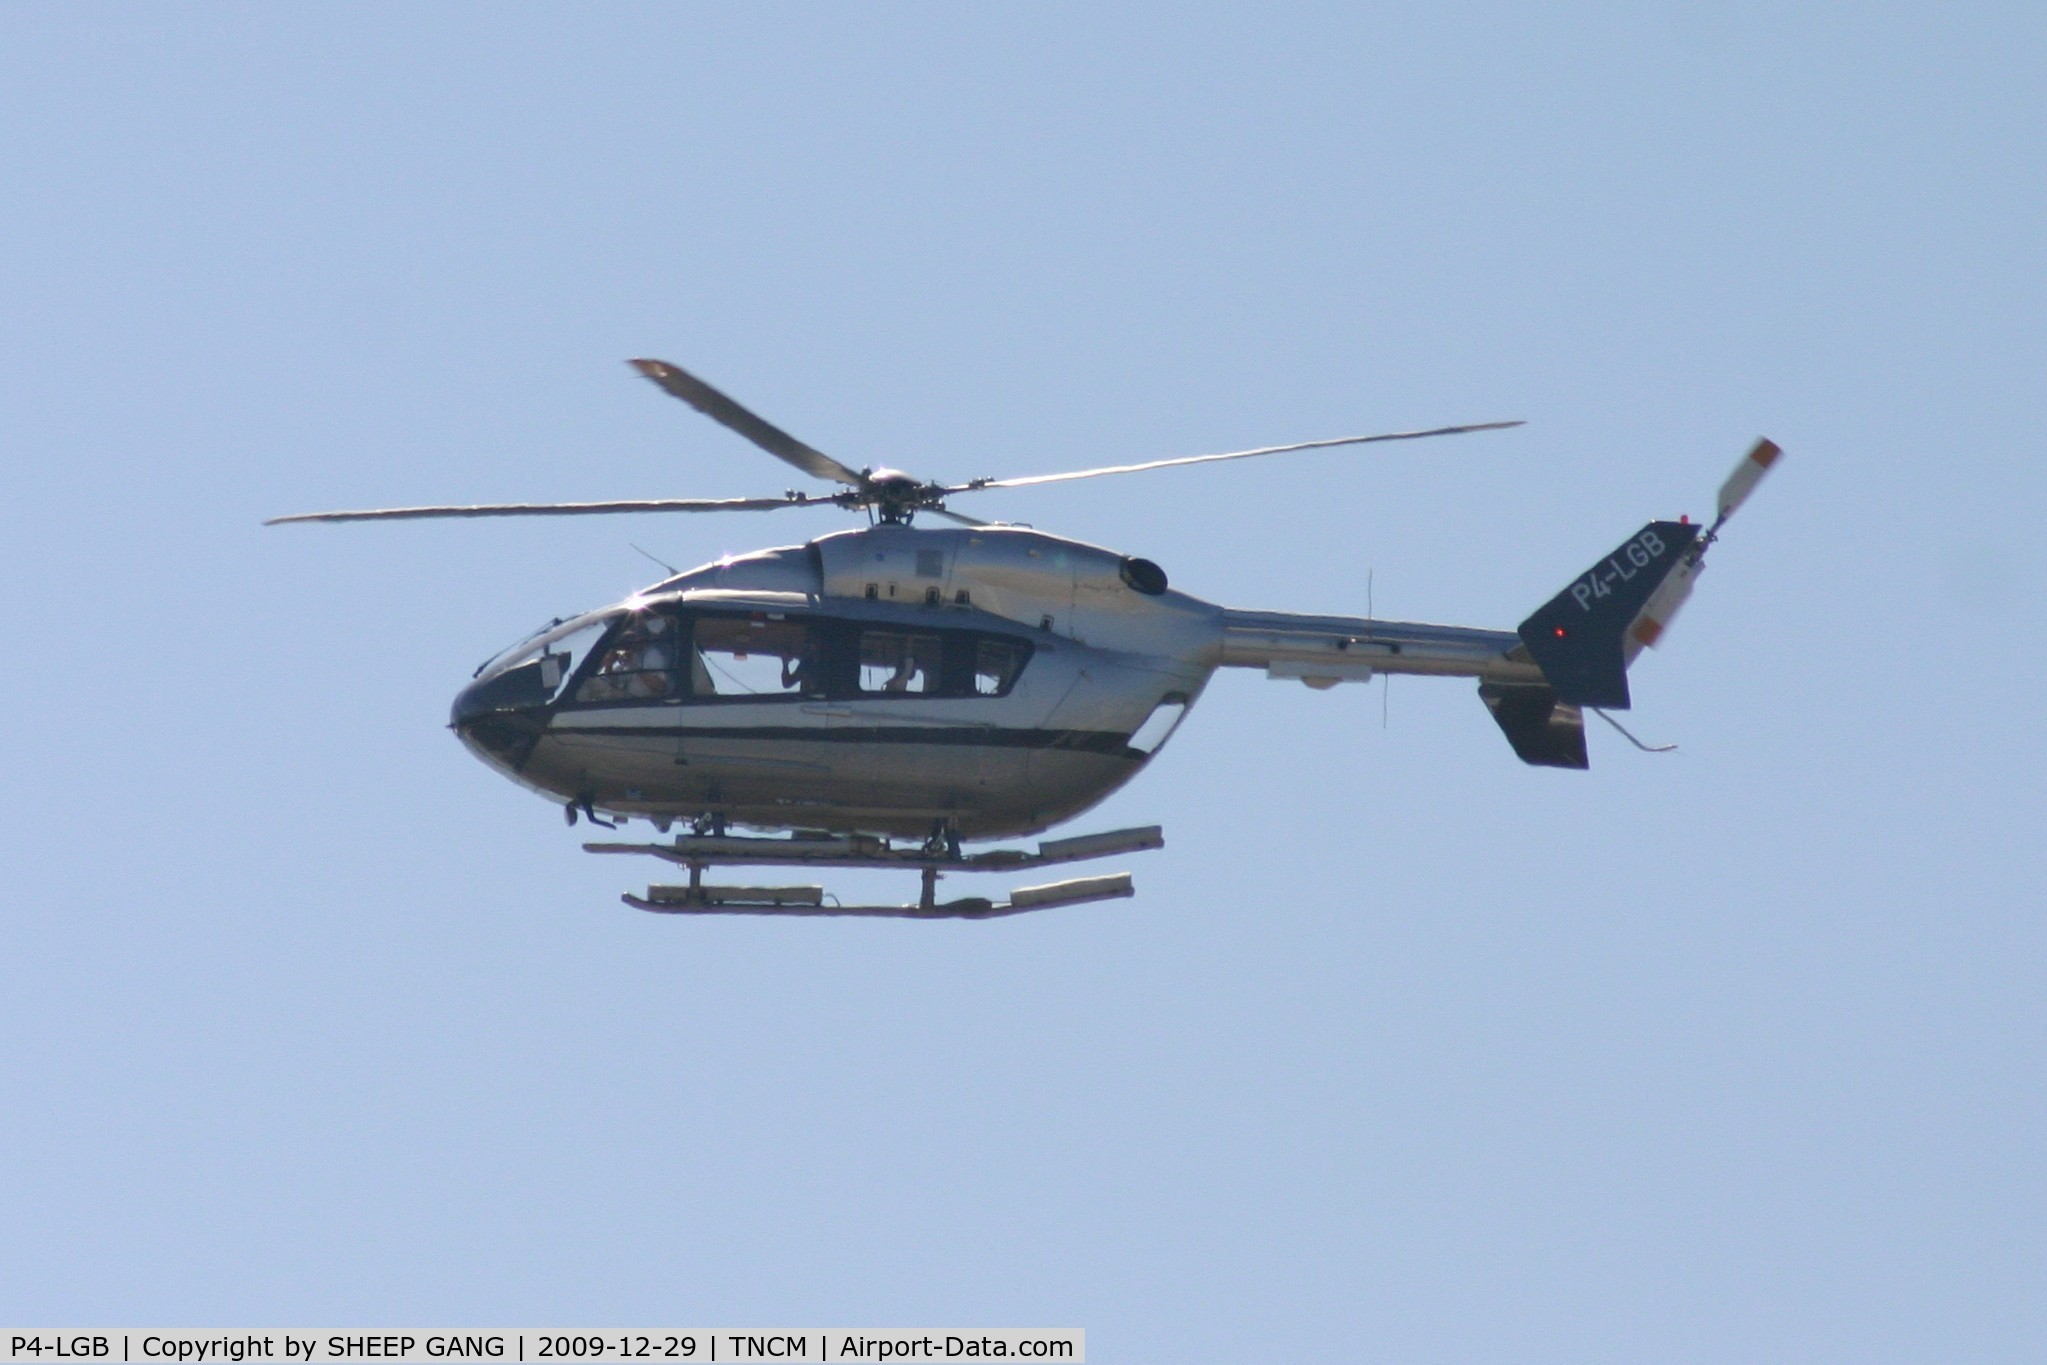 P4-LGB, 2004 Eurocopter-Kawasaki BK-117C-2 C/N 9052, P4-LGB the small bandit in flight to he helipad